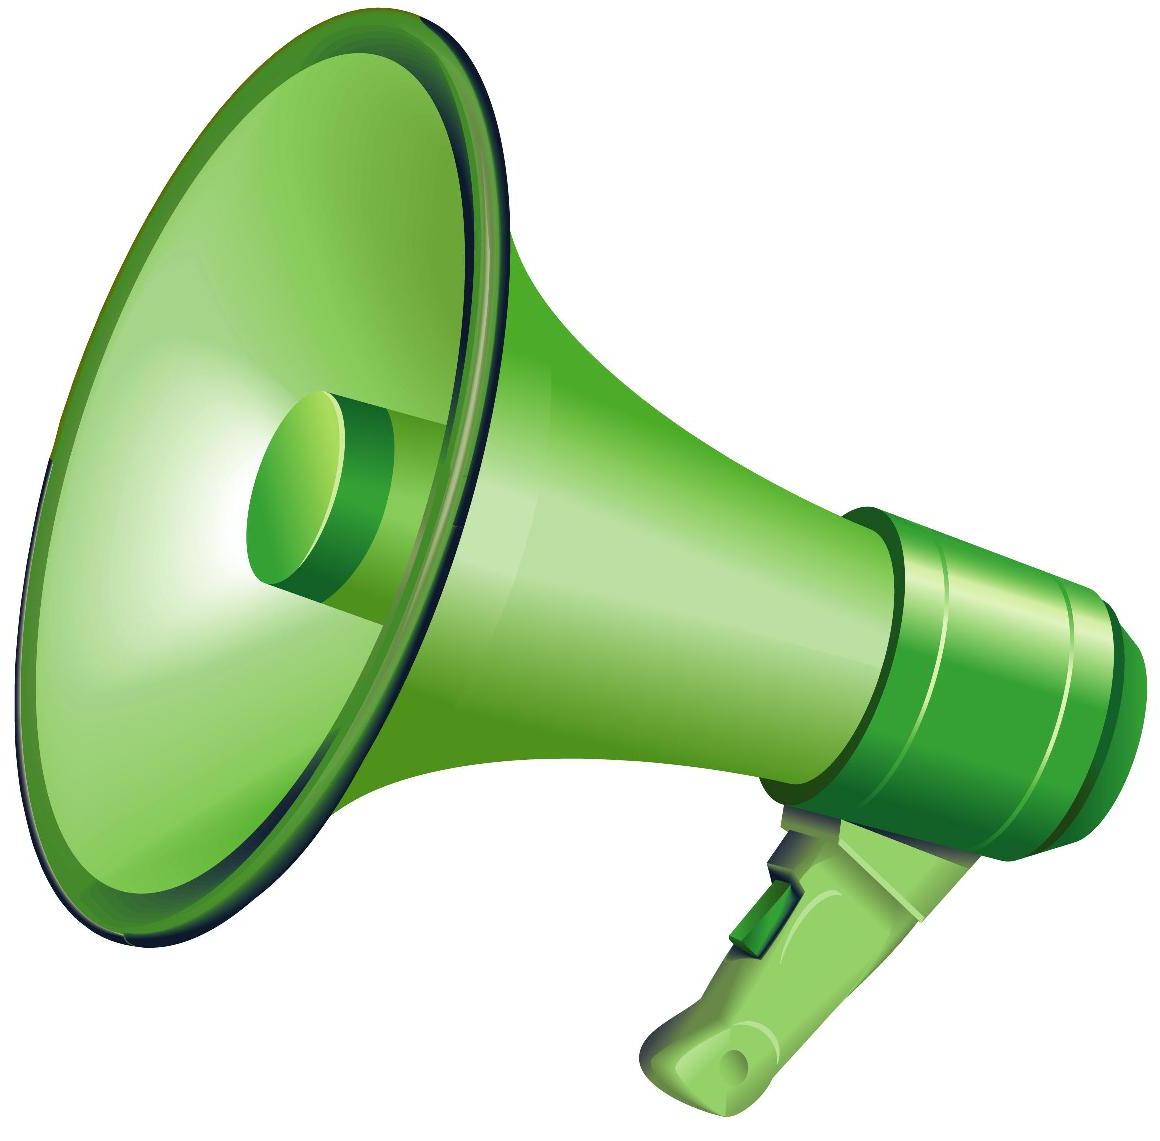 green-loud-speaker-clipart-free-image-download